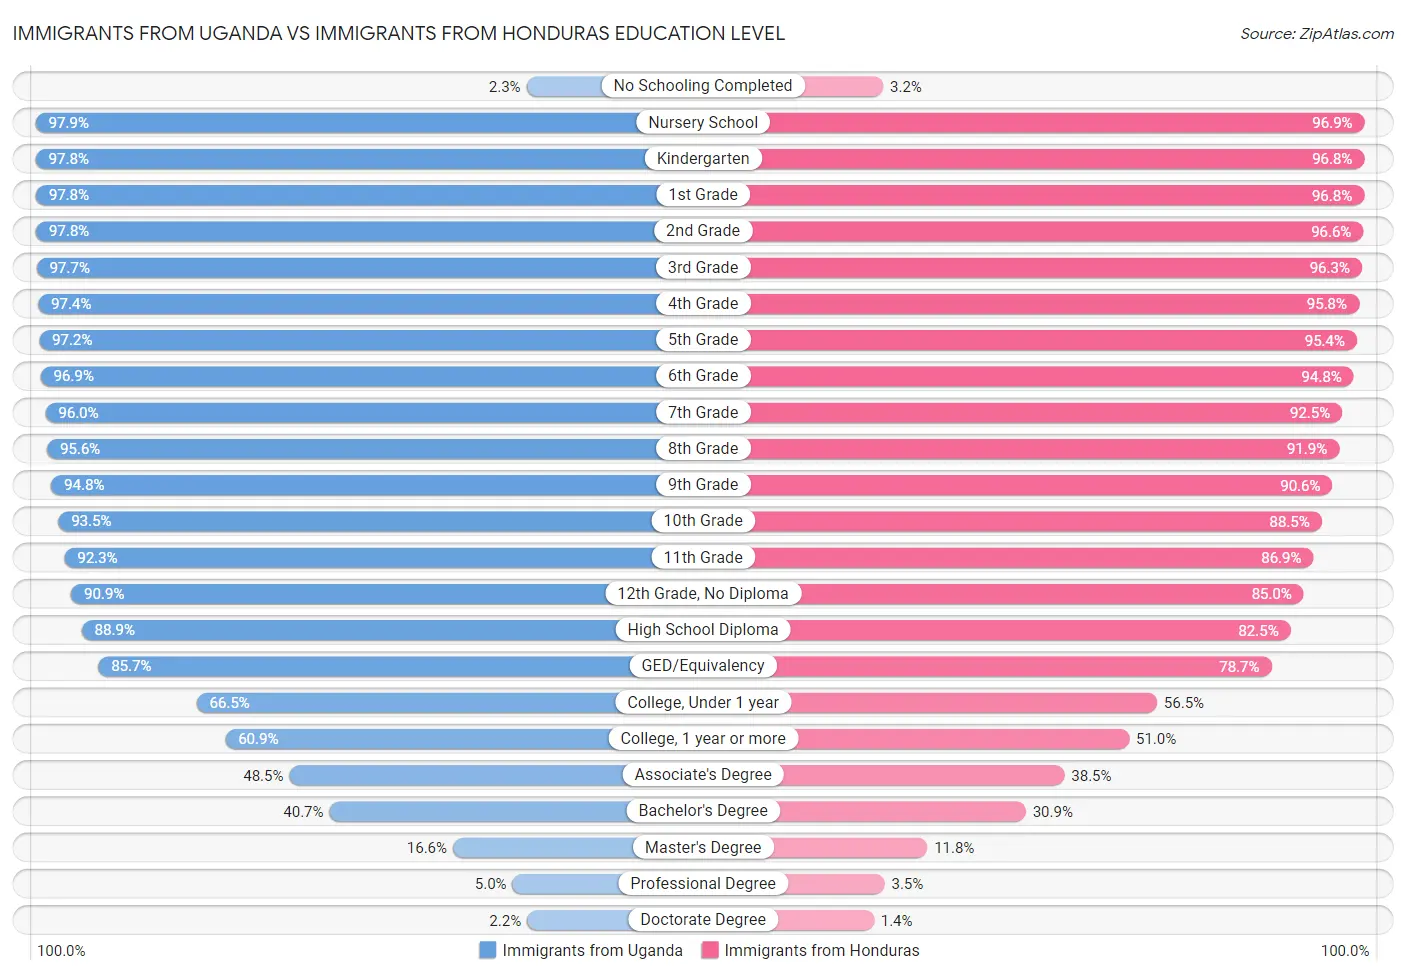 Immigrants from Uganda vs Immigrants from Honduras Education Level